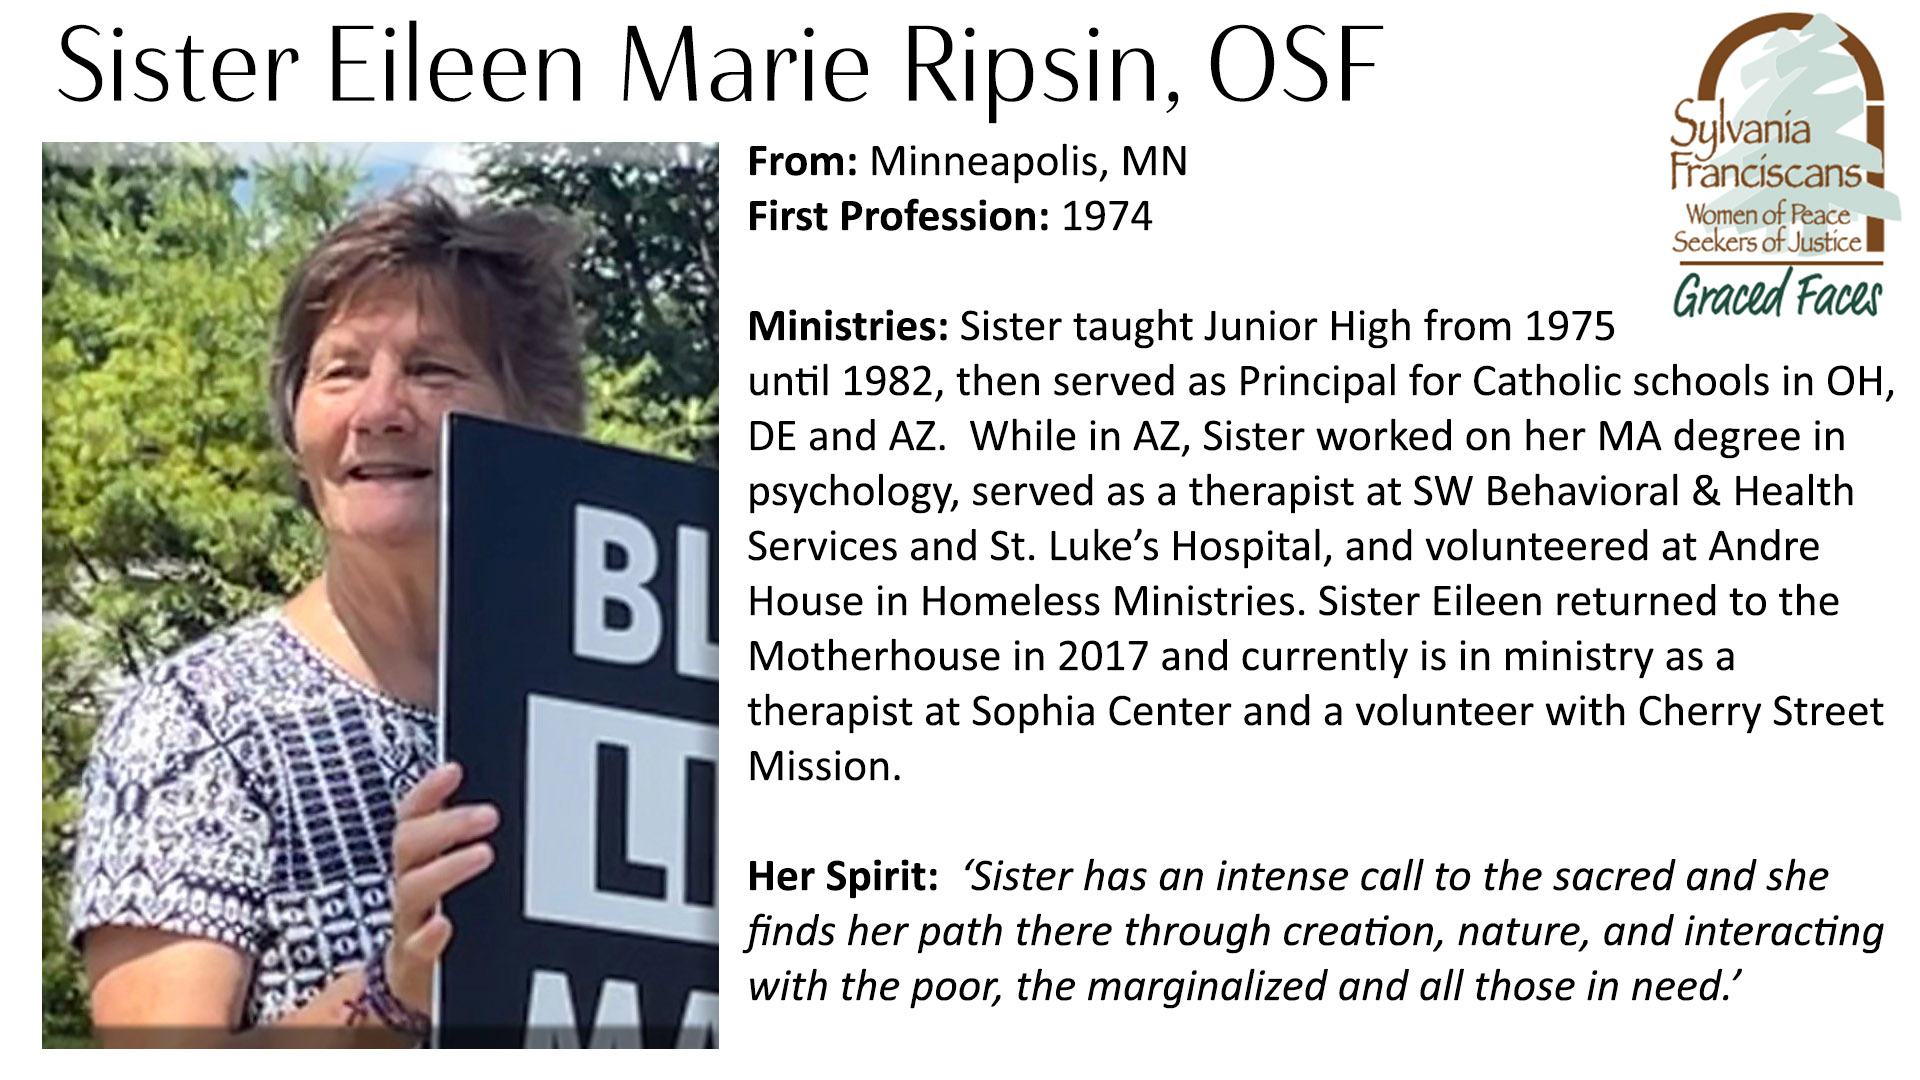 Sister Eileen Marie Ripsin, OSF